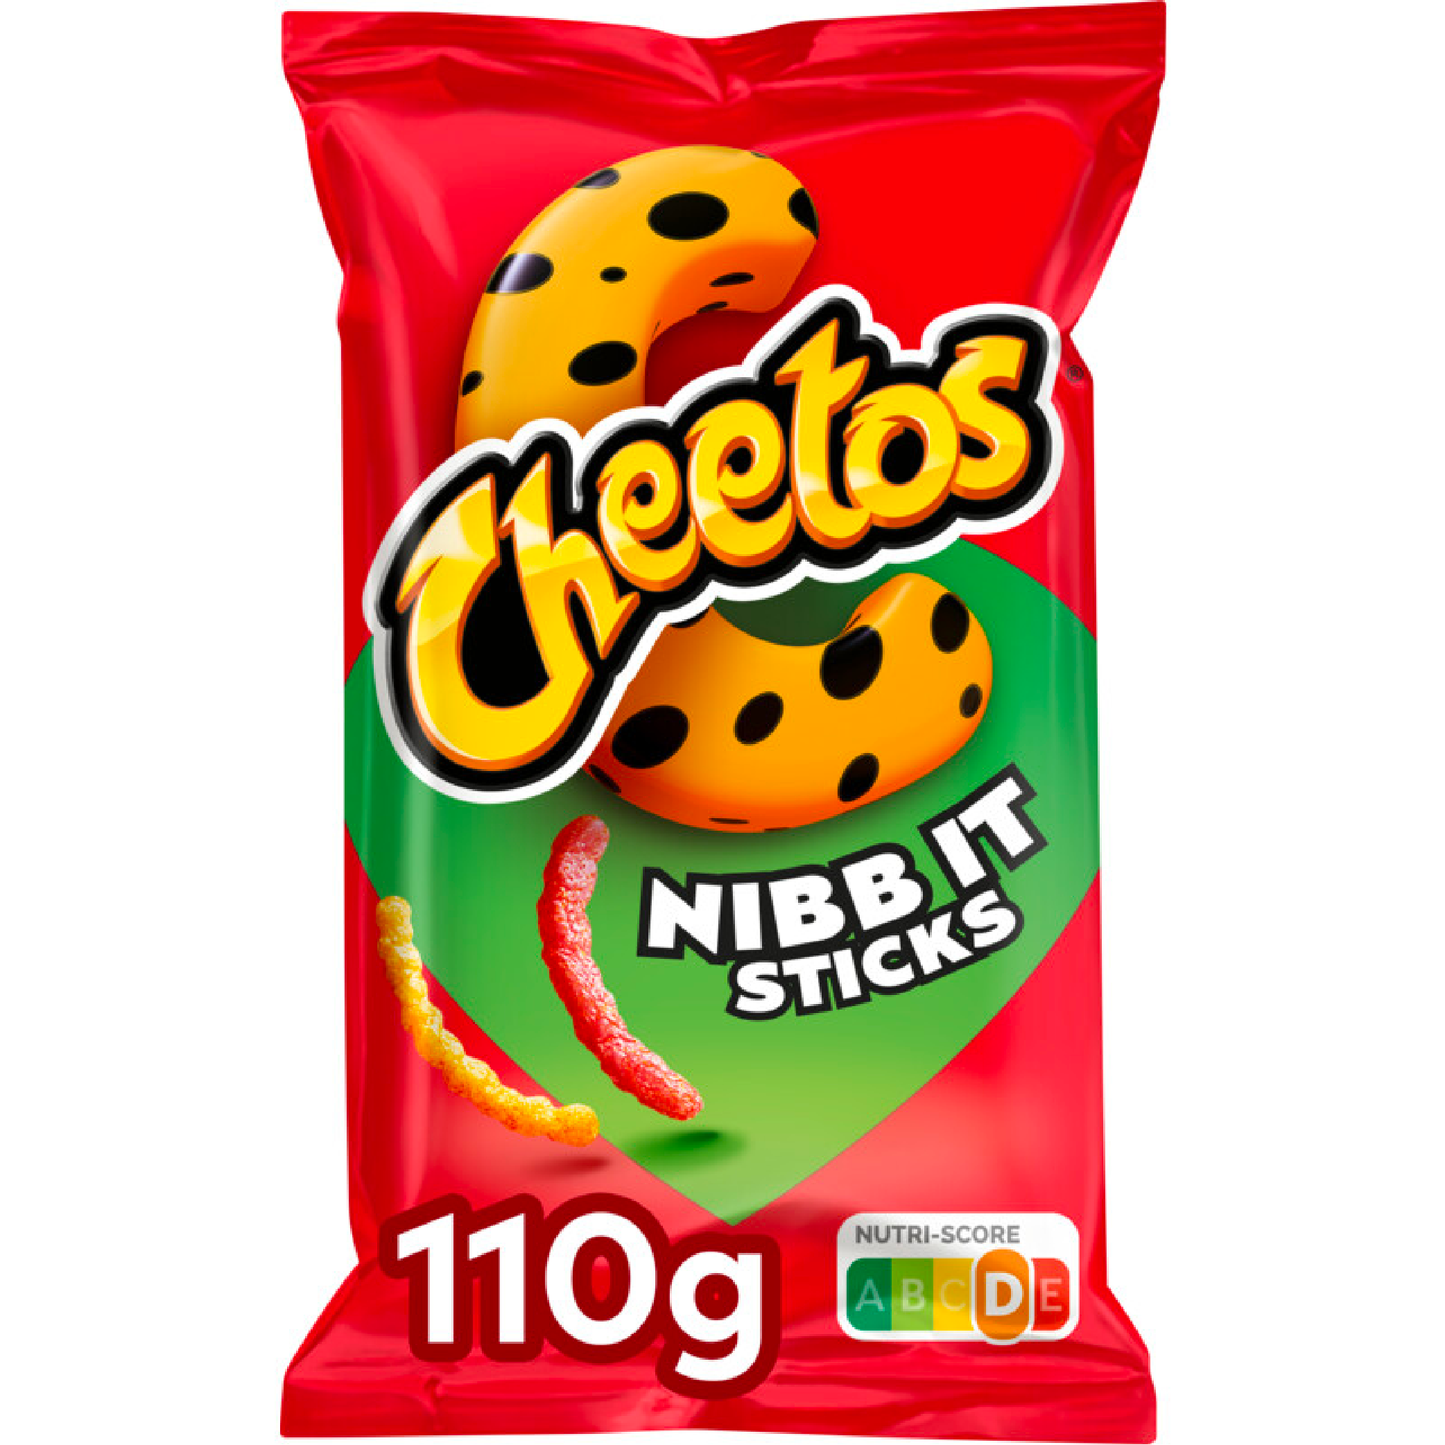 Cheetos Nibb-It Sticks - Snack-It